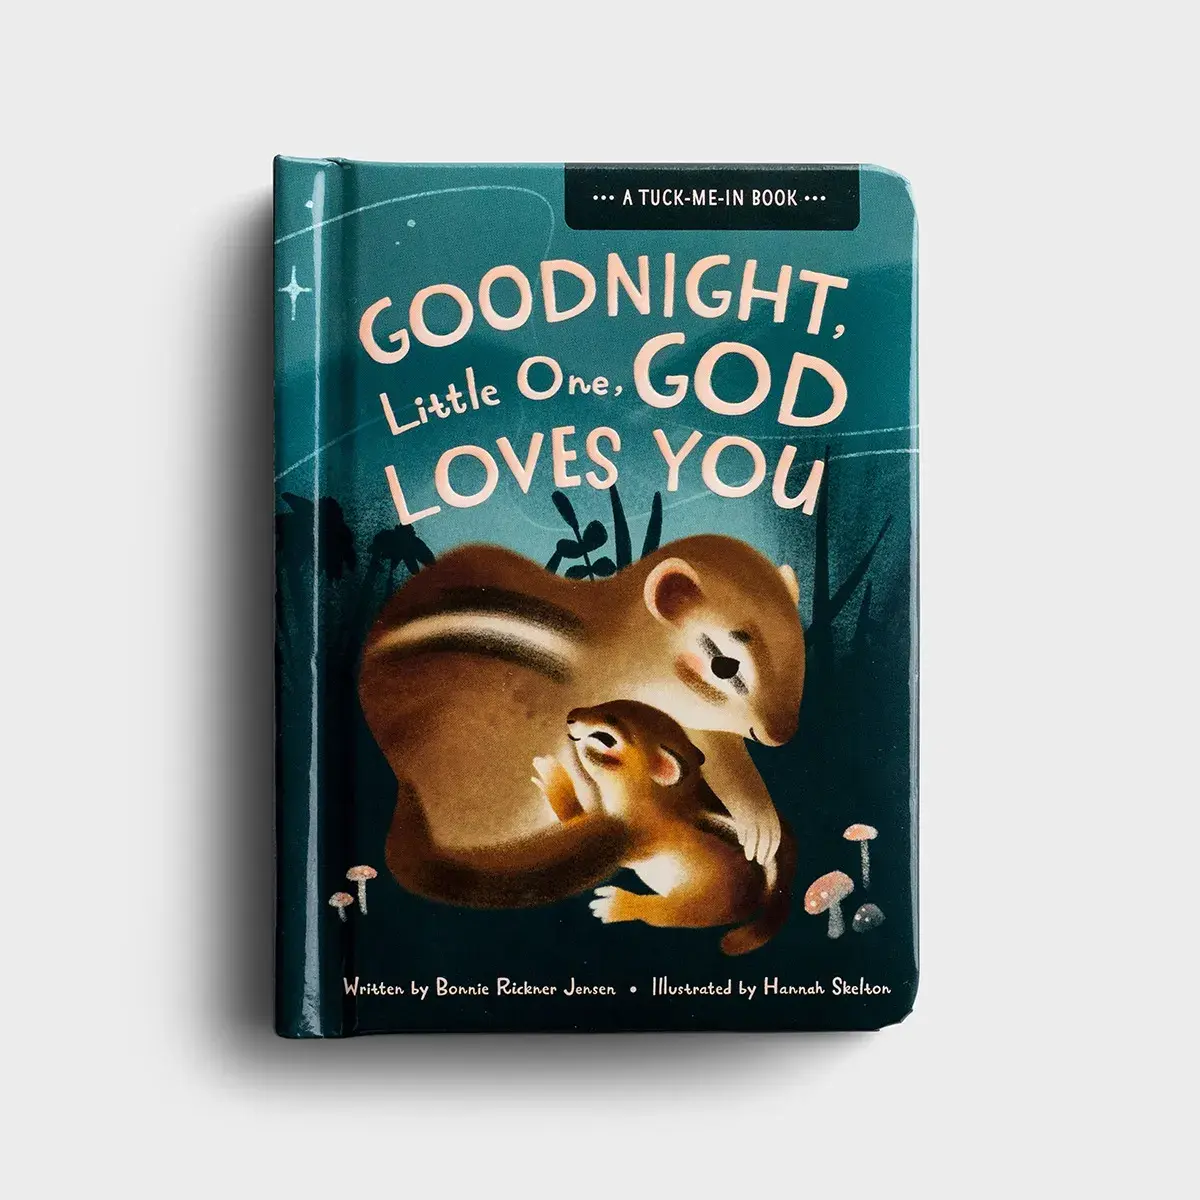 Bonnie Rickner Jensen Goodnight Little One, God Loves You - A Tuck-Me-In Book